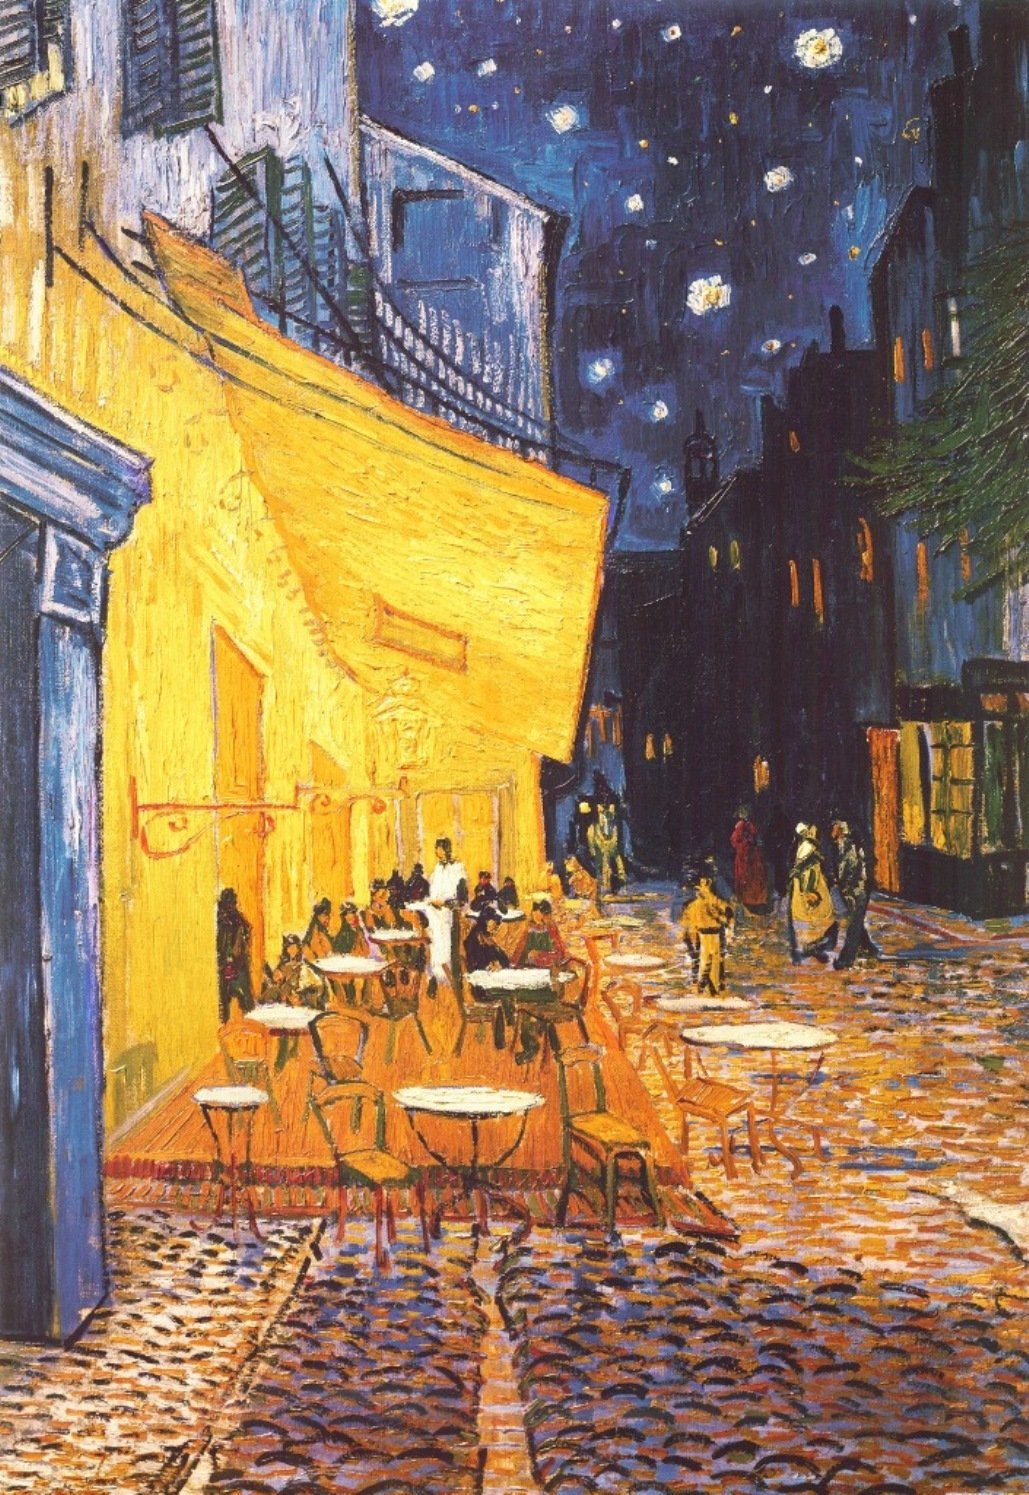 Kunstdruck Stockregenschirm Lilienfeld Nachtcafé Motivschirm von Vincent Kunst Gogh: Stabil, Van